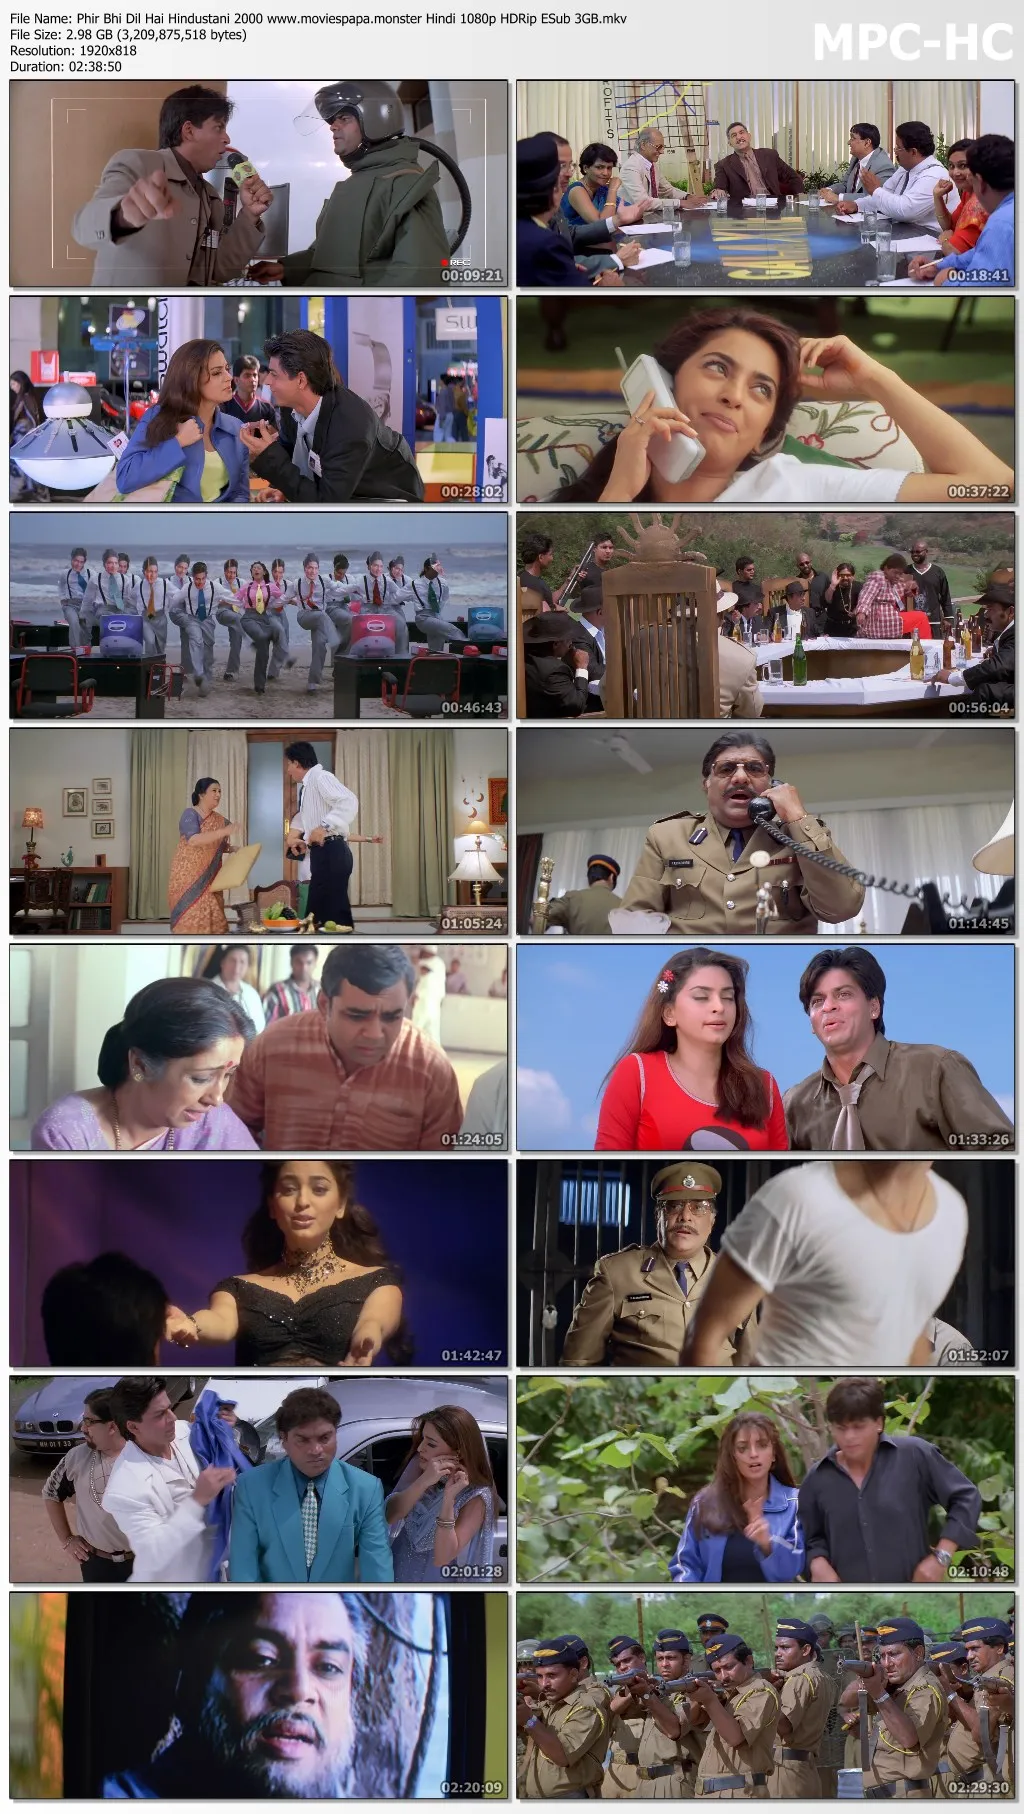 Phir Bhi Dil Hai Hindustani 2000 Hindi 1080p | 720p | 480p HDRip ESub Download